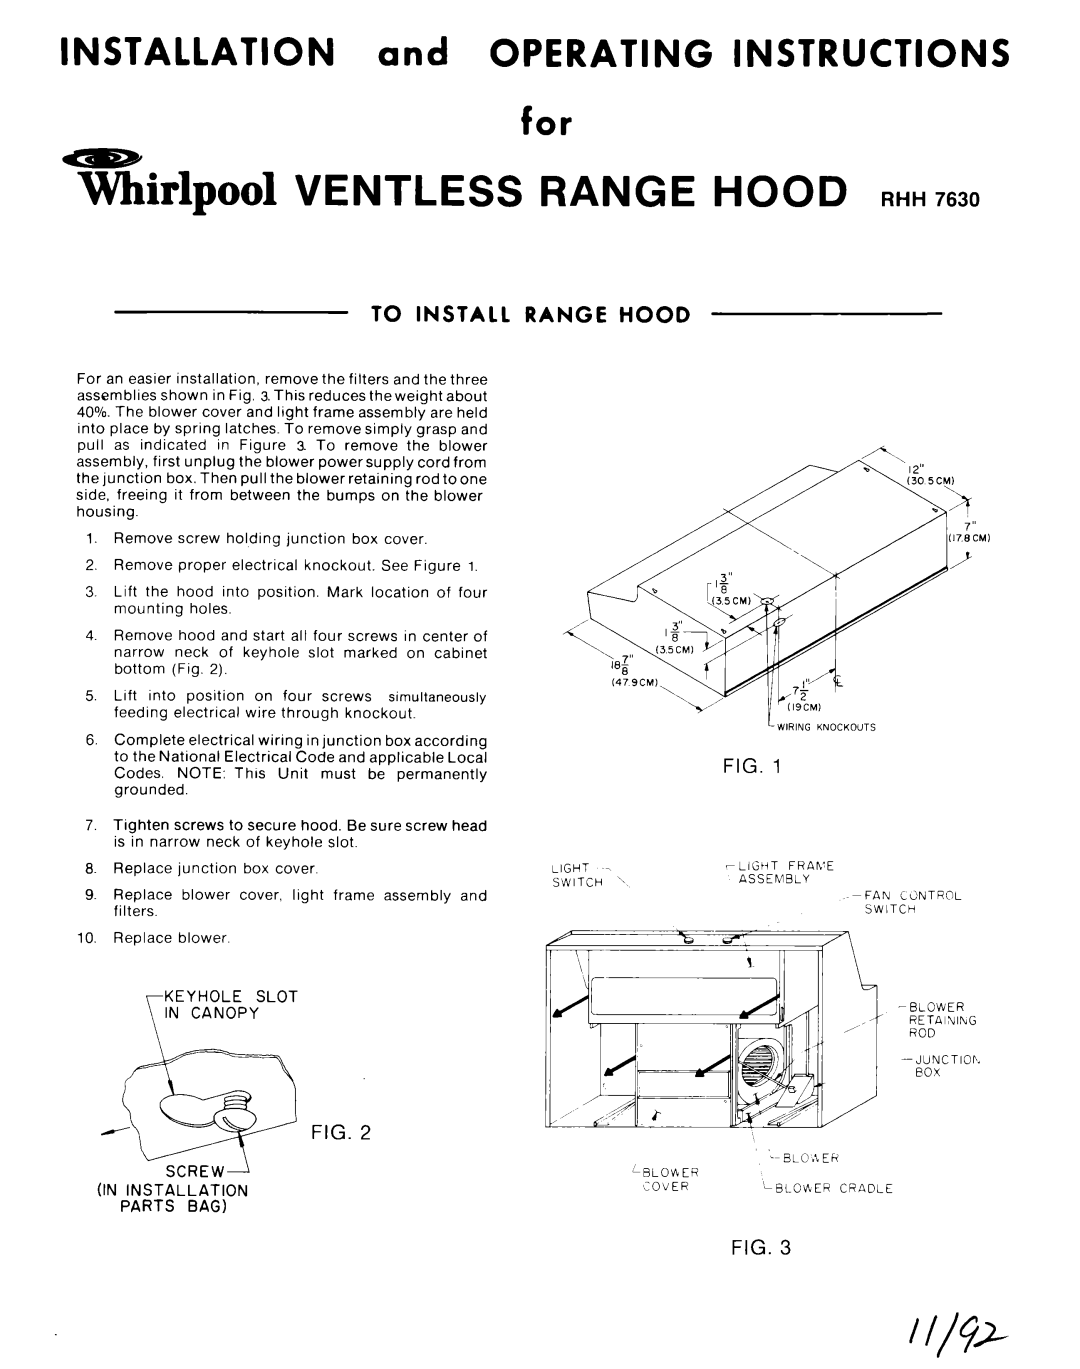 Whirlpool RHH 7630 manual To Install Range Hood, hpool VENTLESS RANGE HOOD RHH 